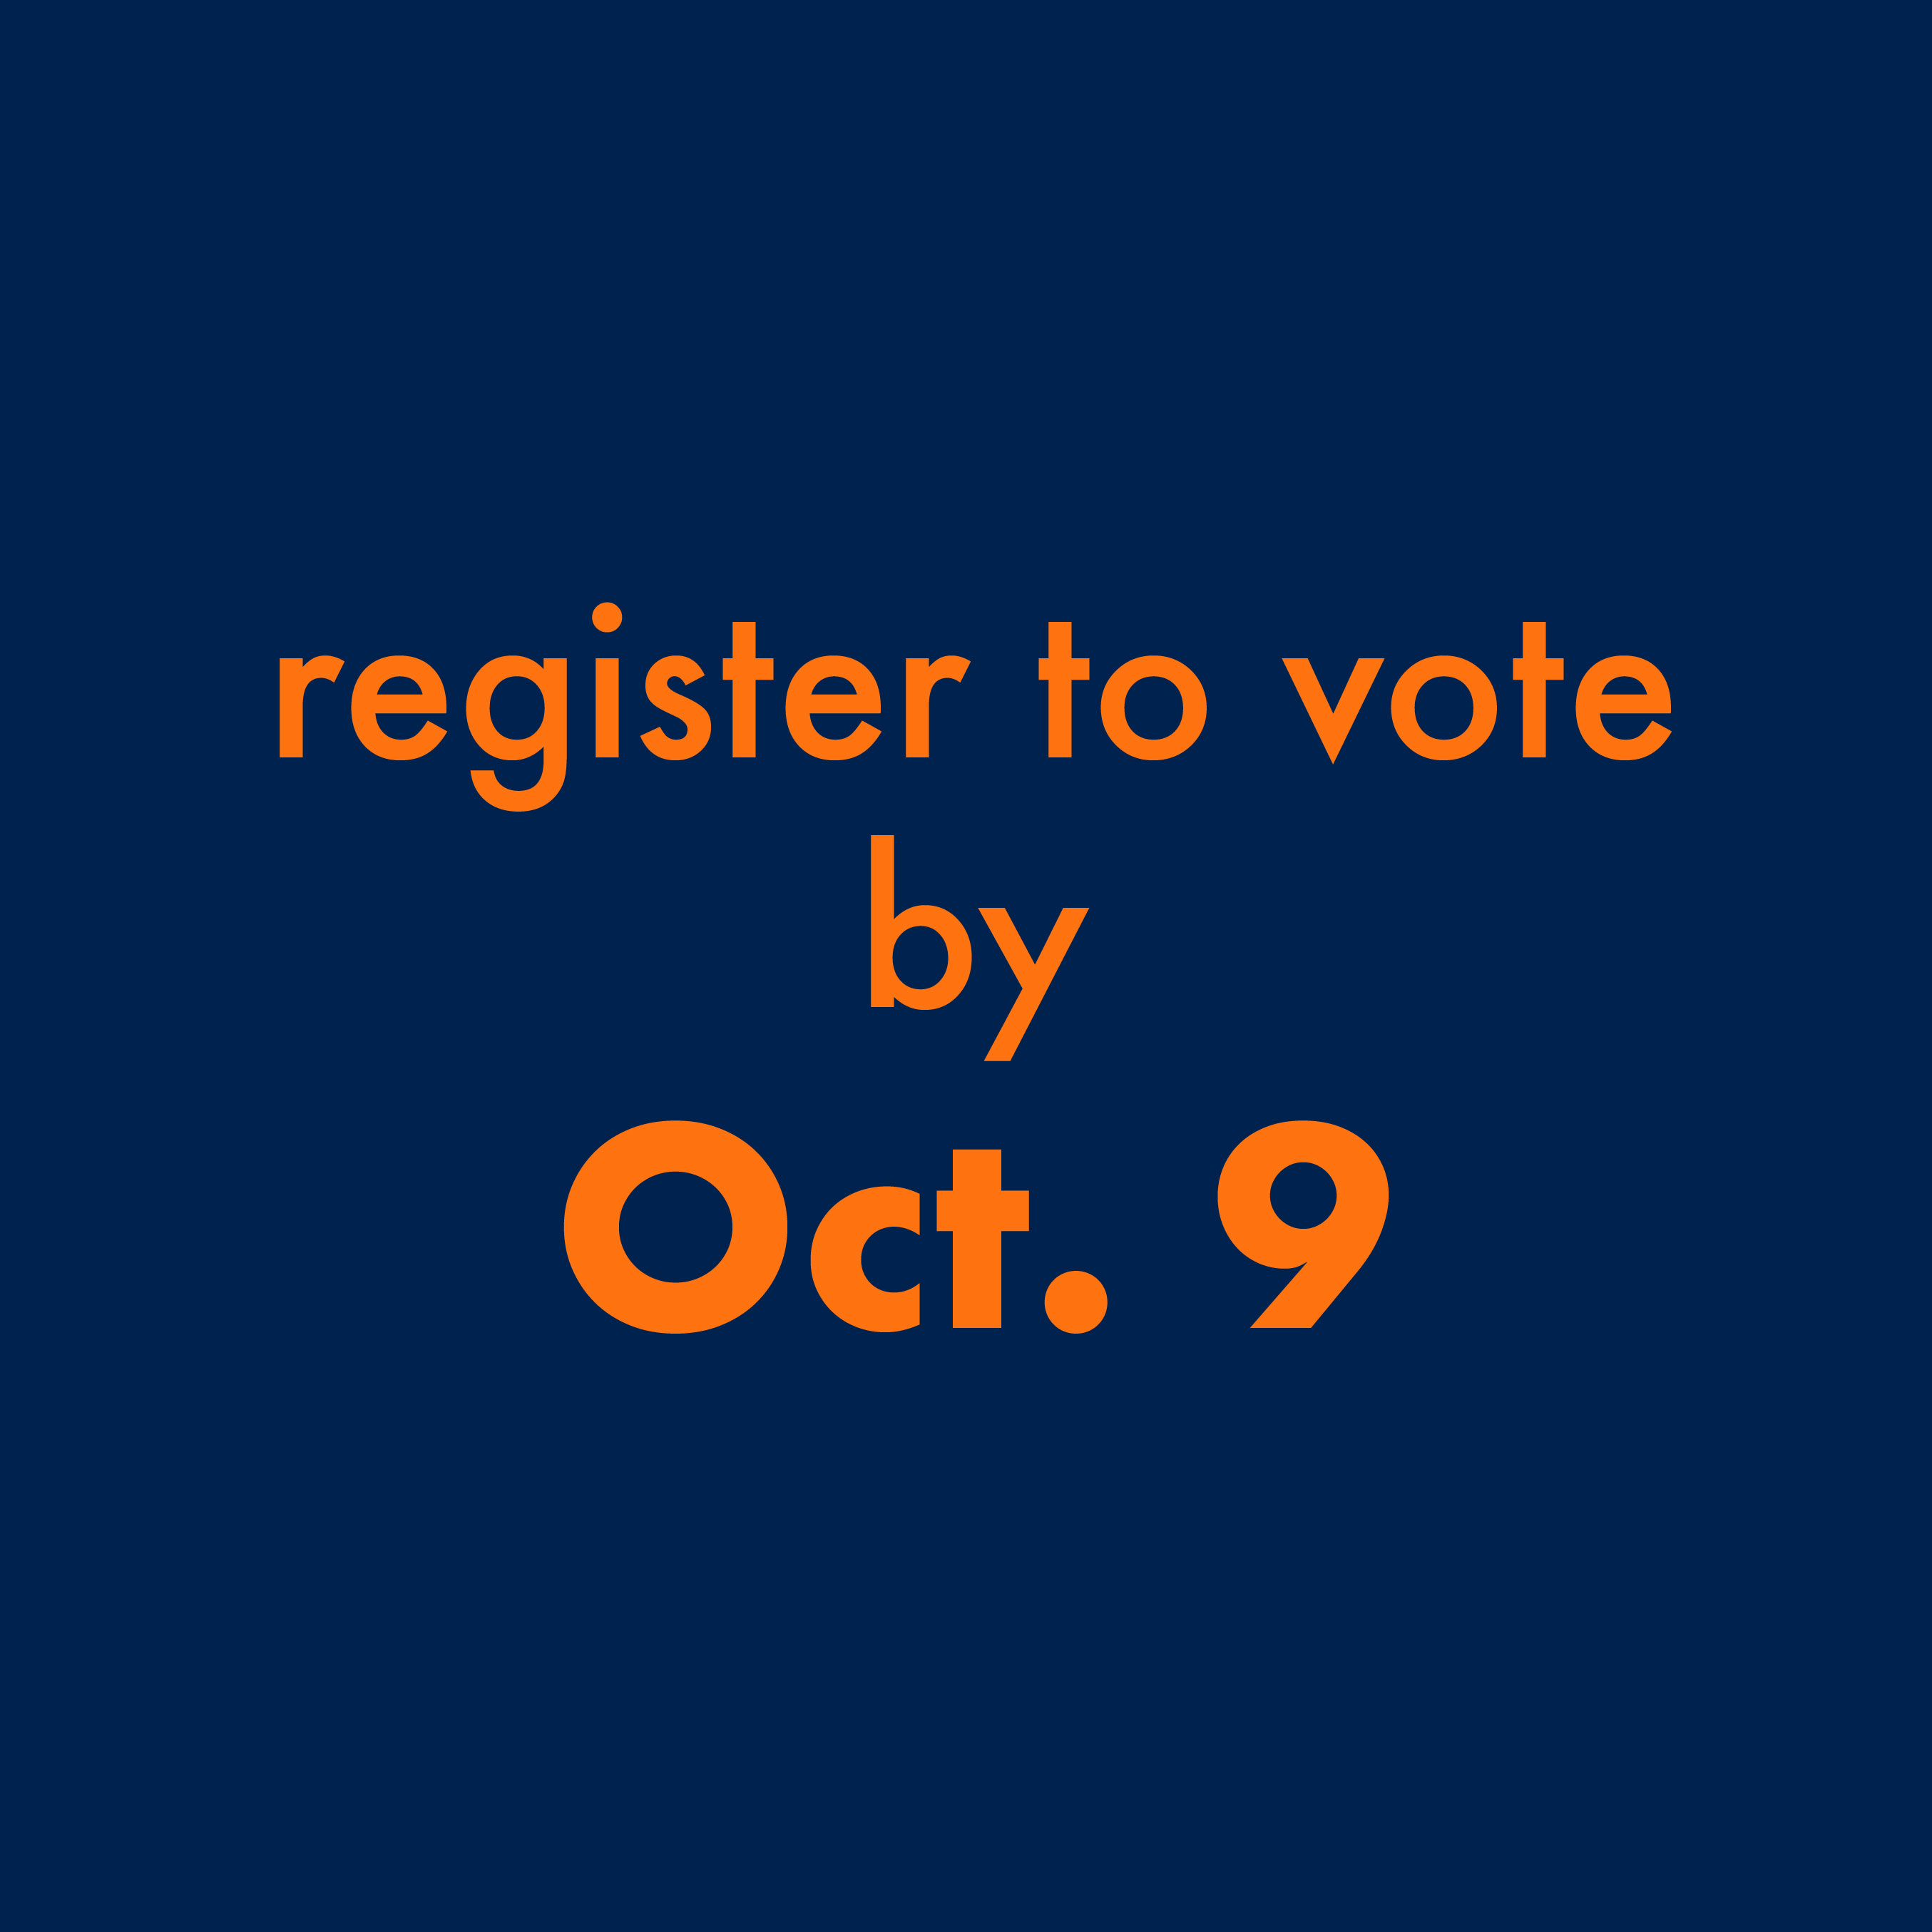 Register to vote by Oct. 9